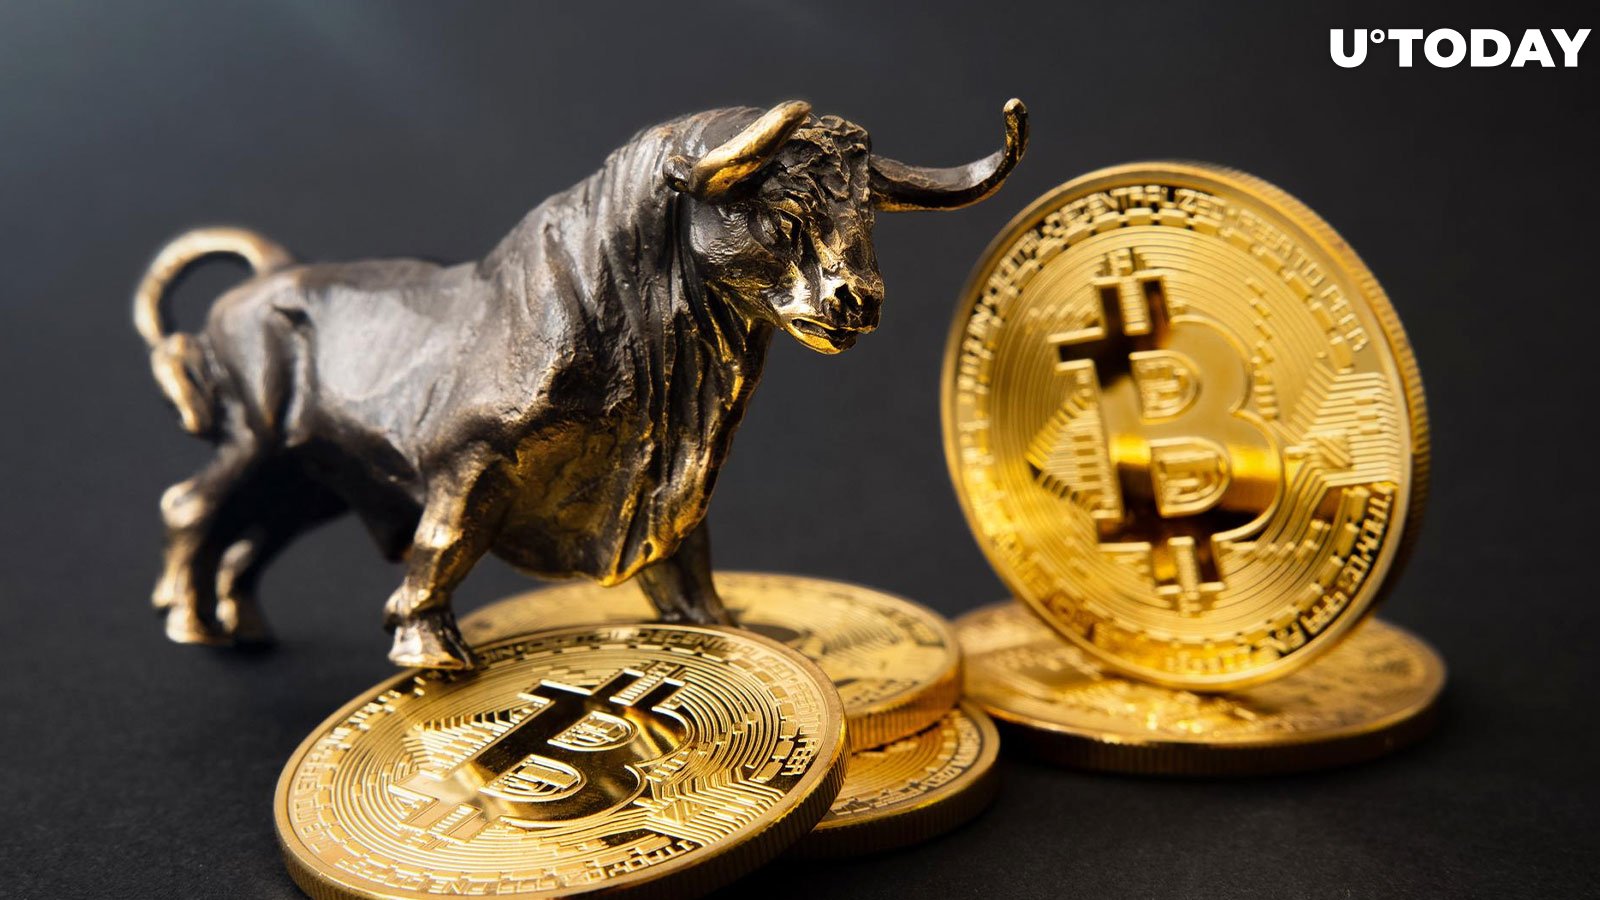 Top Bitcoin Analyst Calls 'Buy the Dip' Amid Bullish Signal